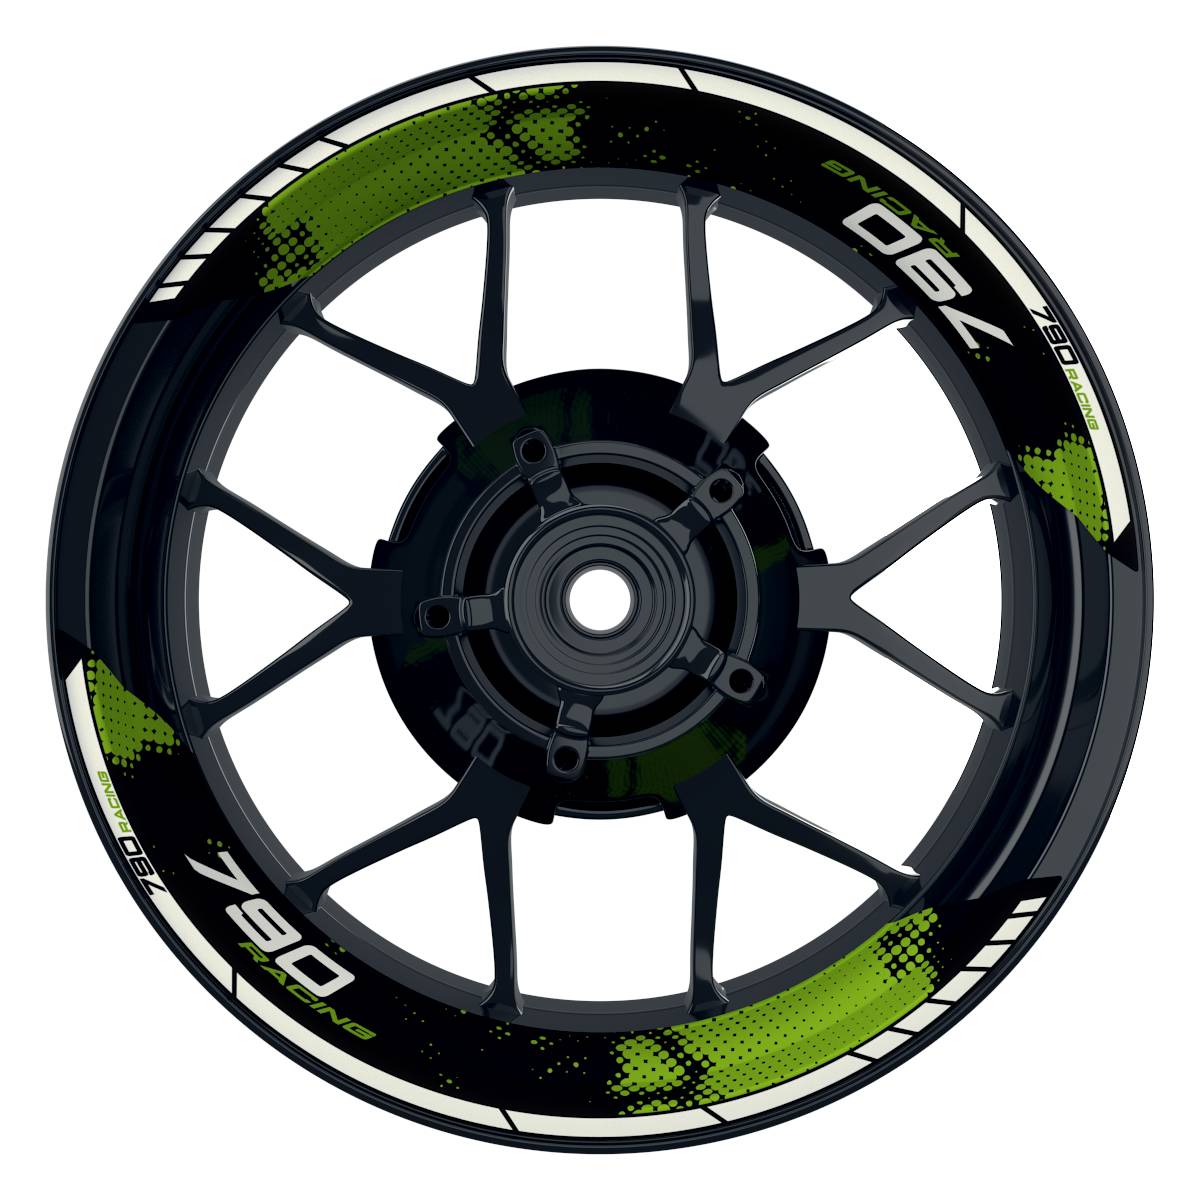 KTM Racing 790 Dots schwarz gruen Frontansicht